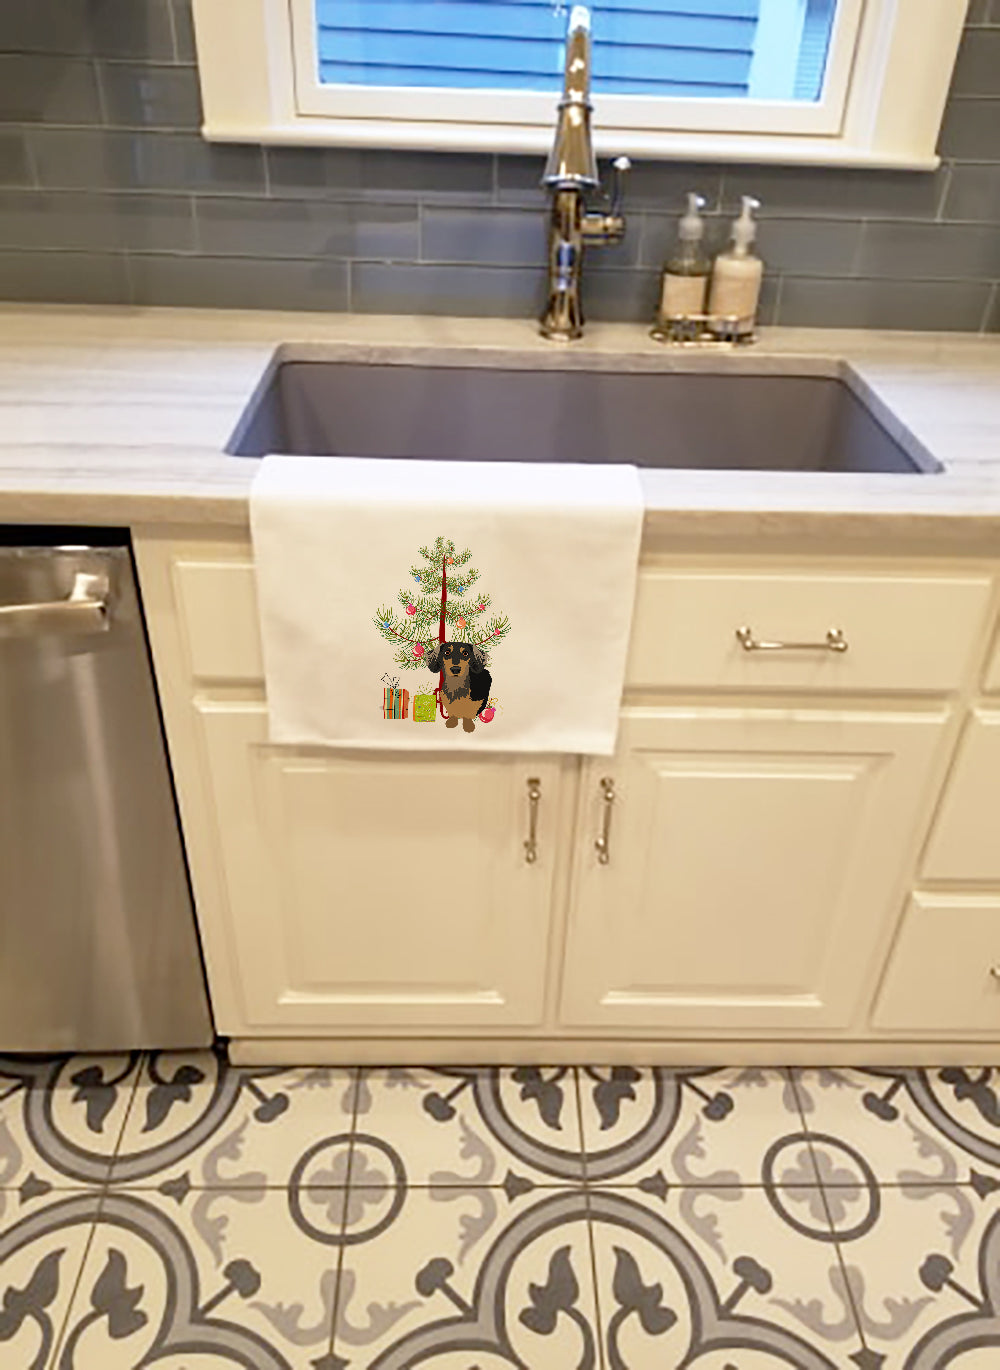 Buy this Dachshund Black and Tan #4 Christmas White Kitchen Towel Set of 2